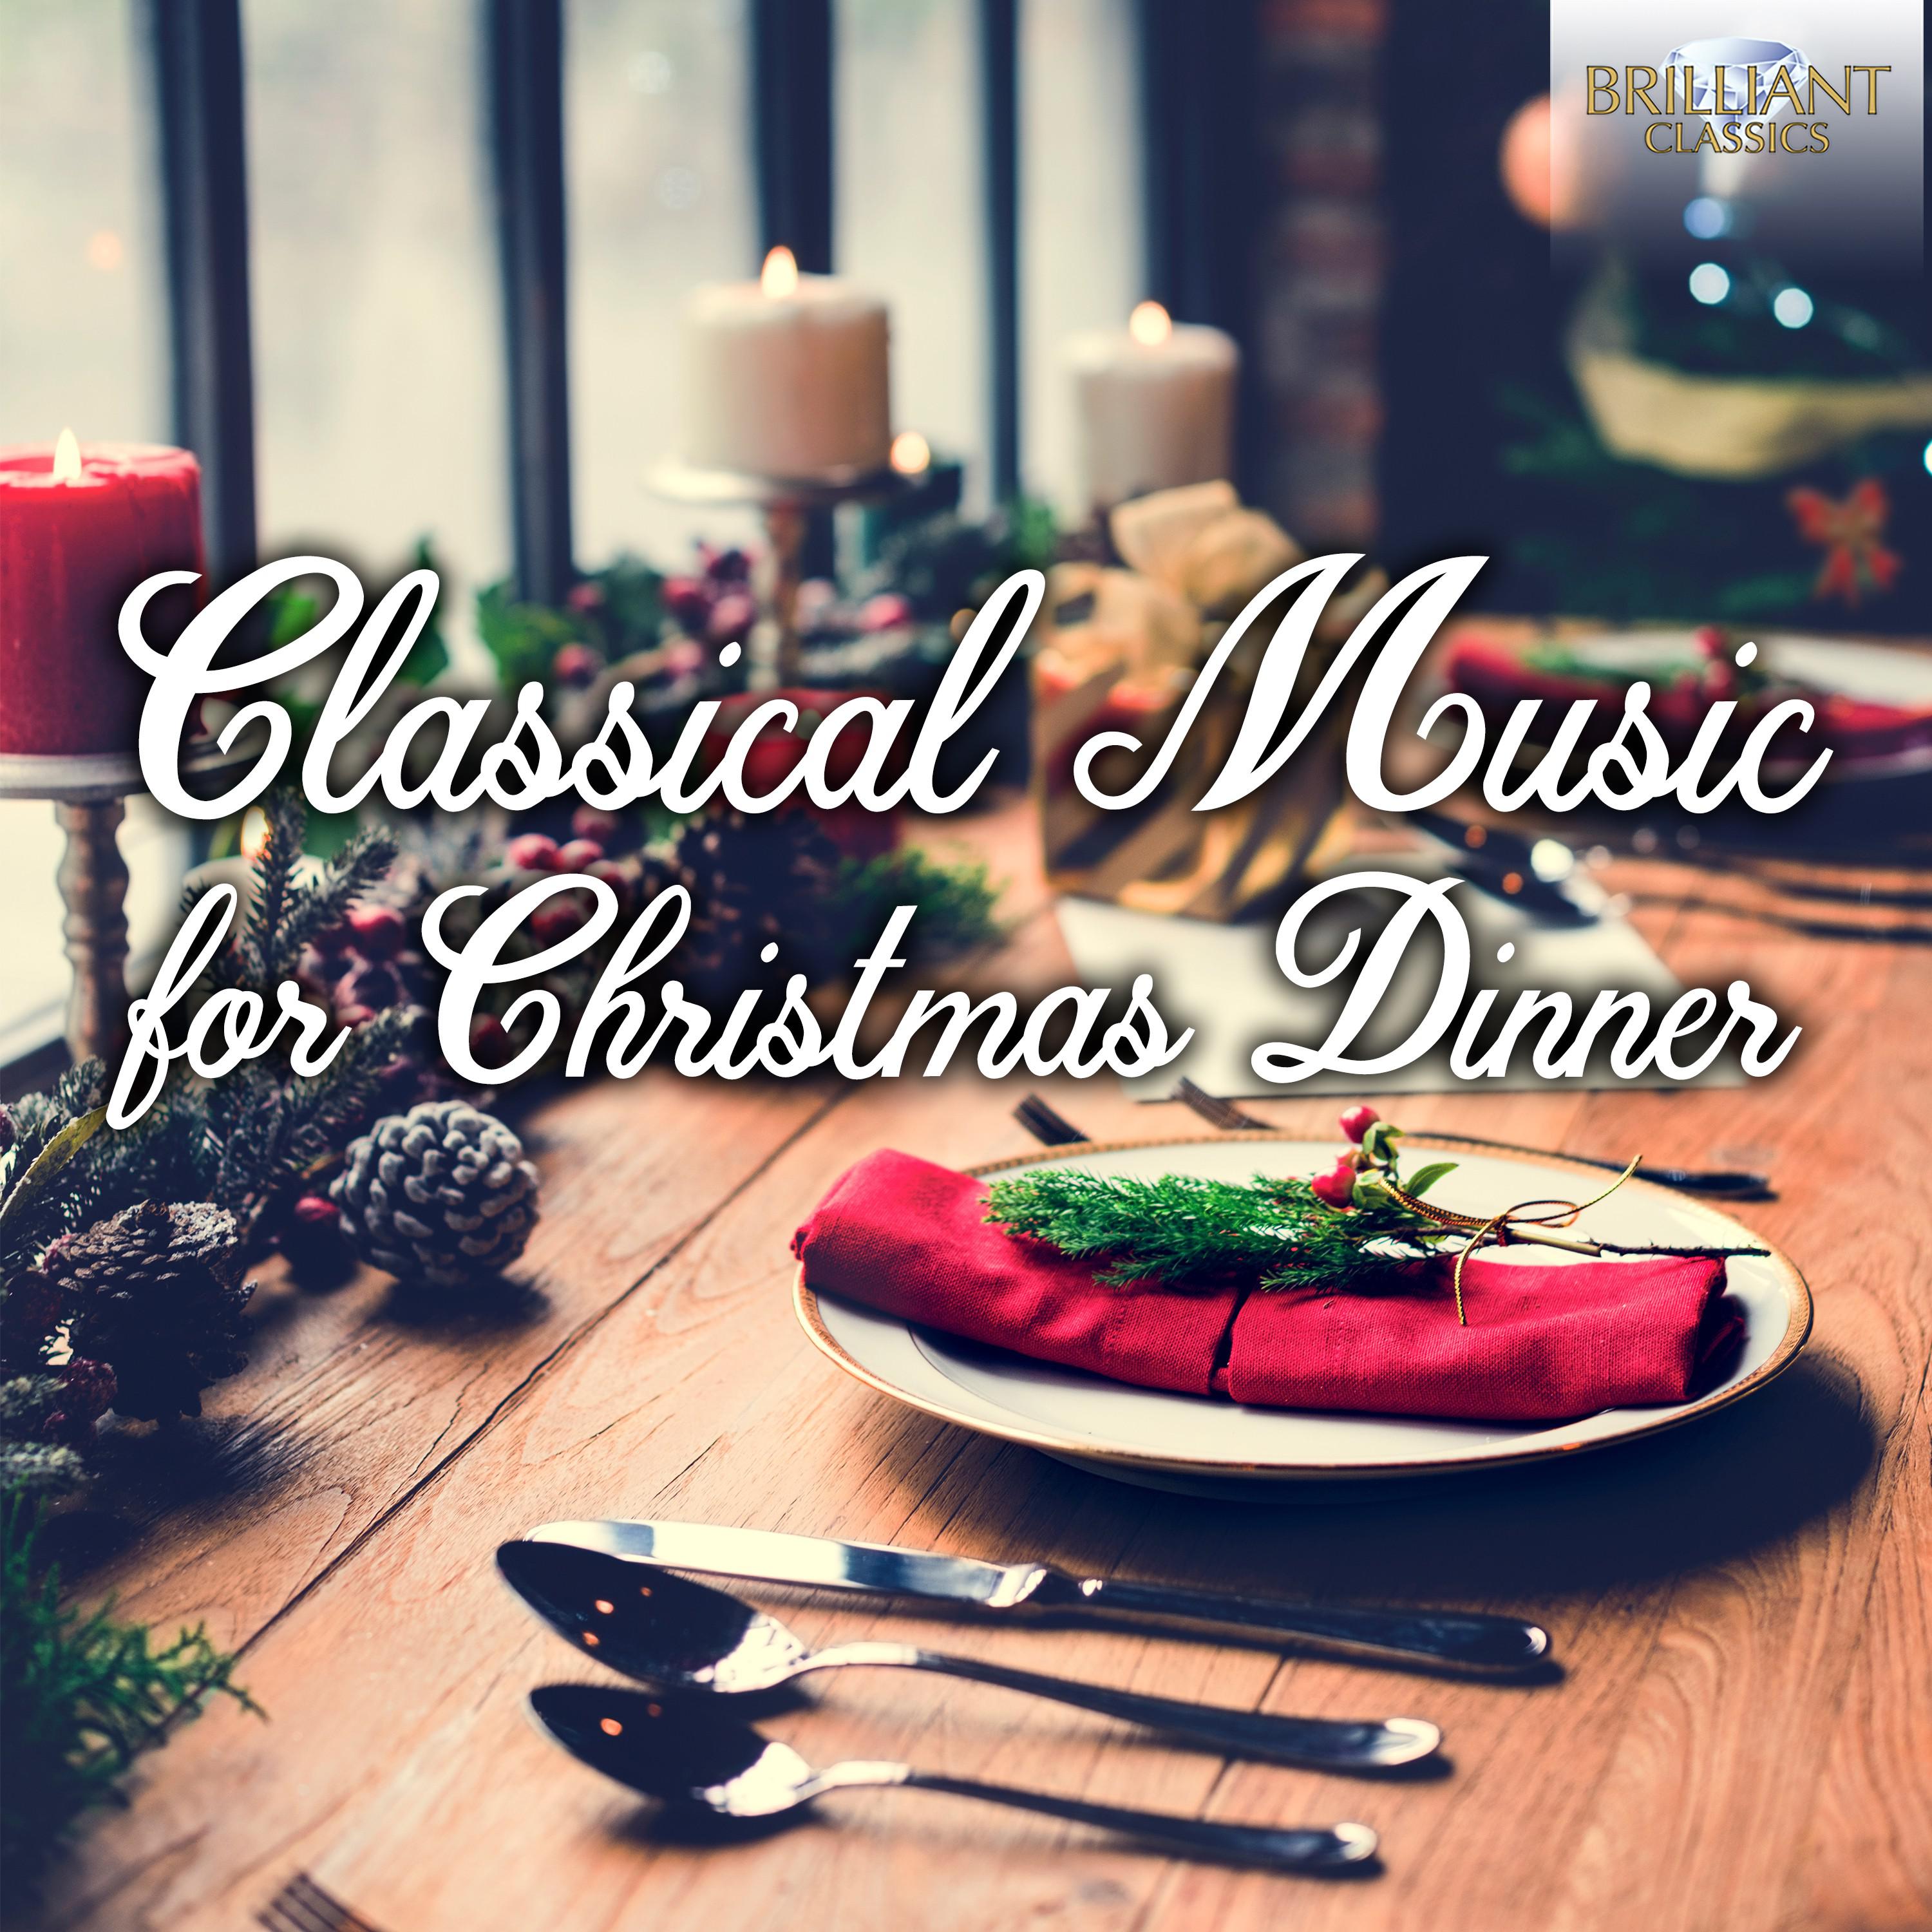 Classical Music for Christmas Dinner